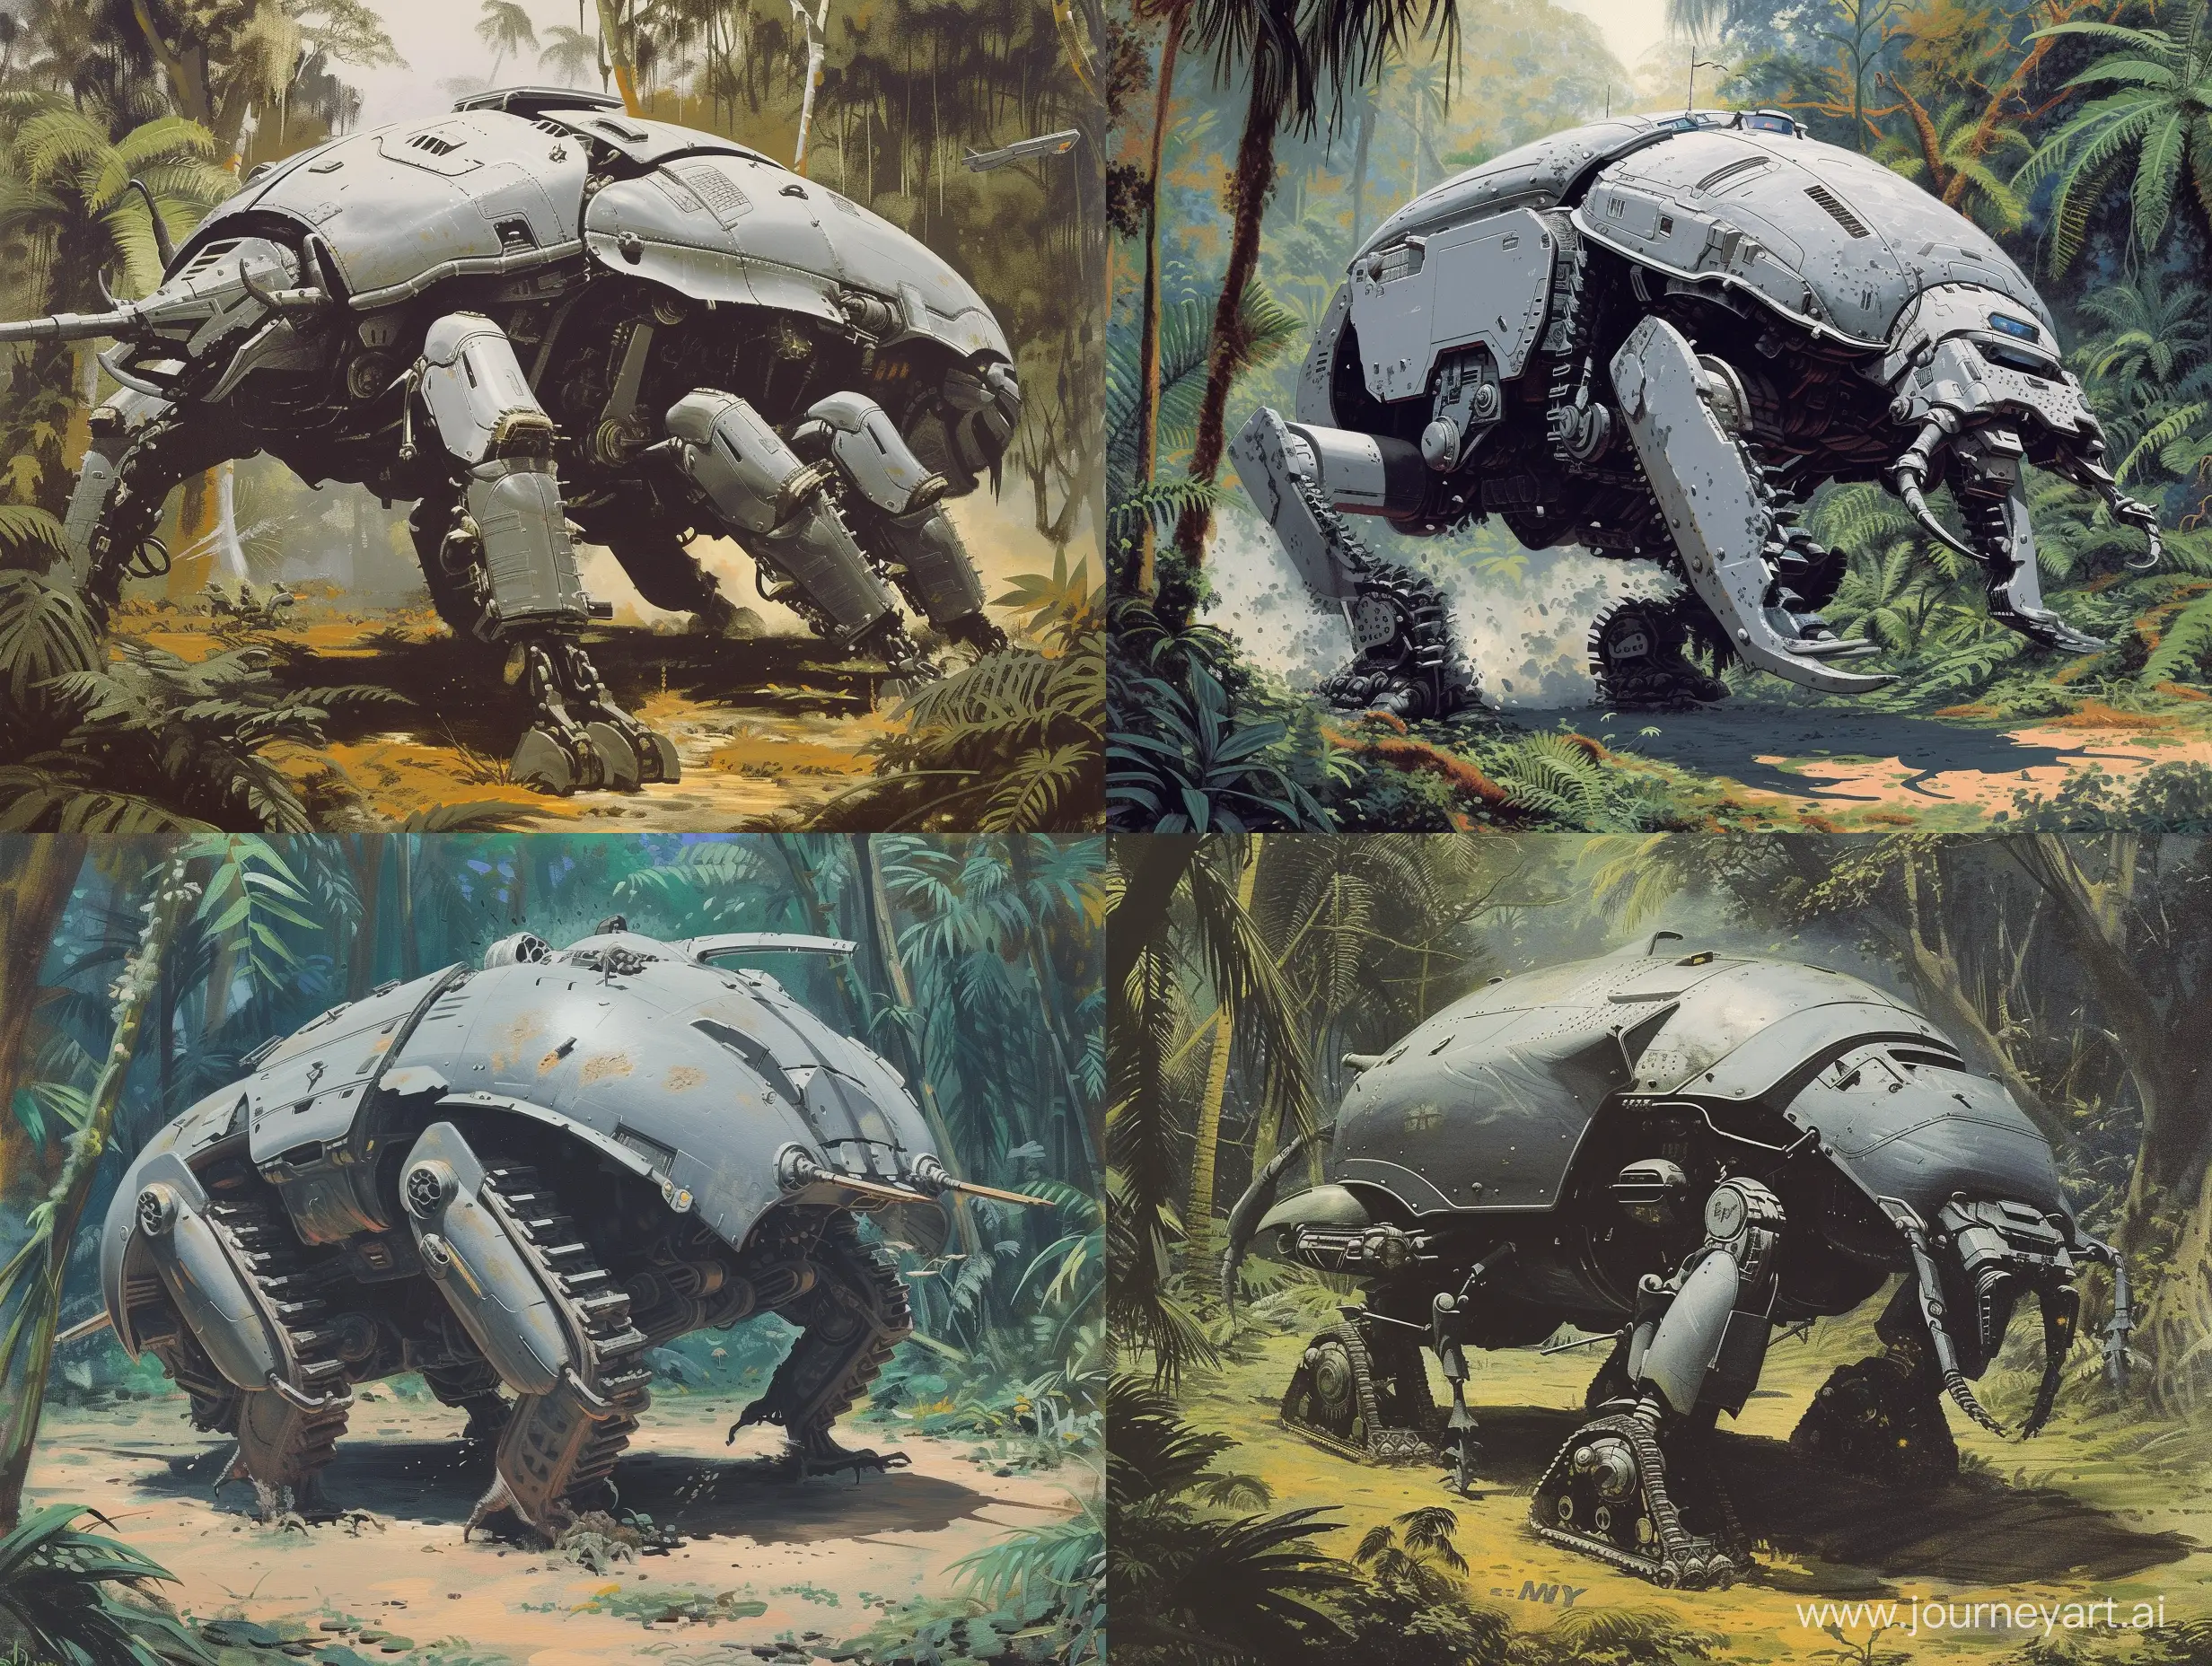 Giant-Armored-Rhinoceros-Beetle-Tank-Battles-in-Jungle-Retro-SciFi-Art